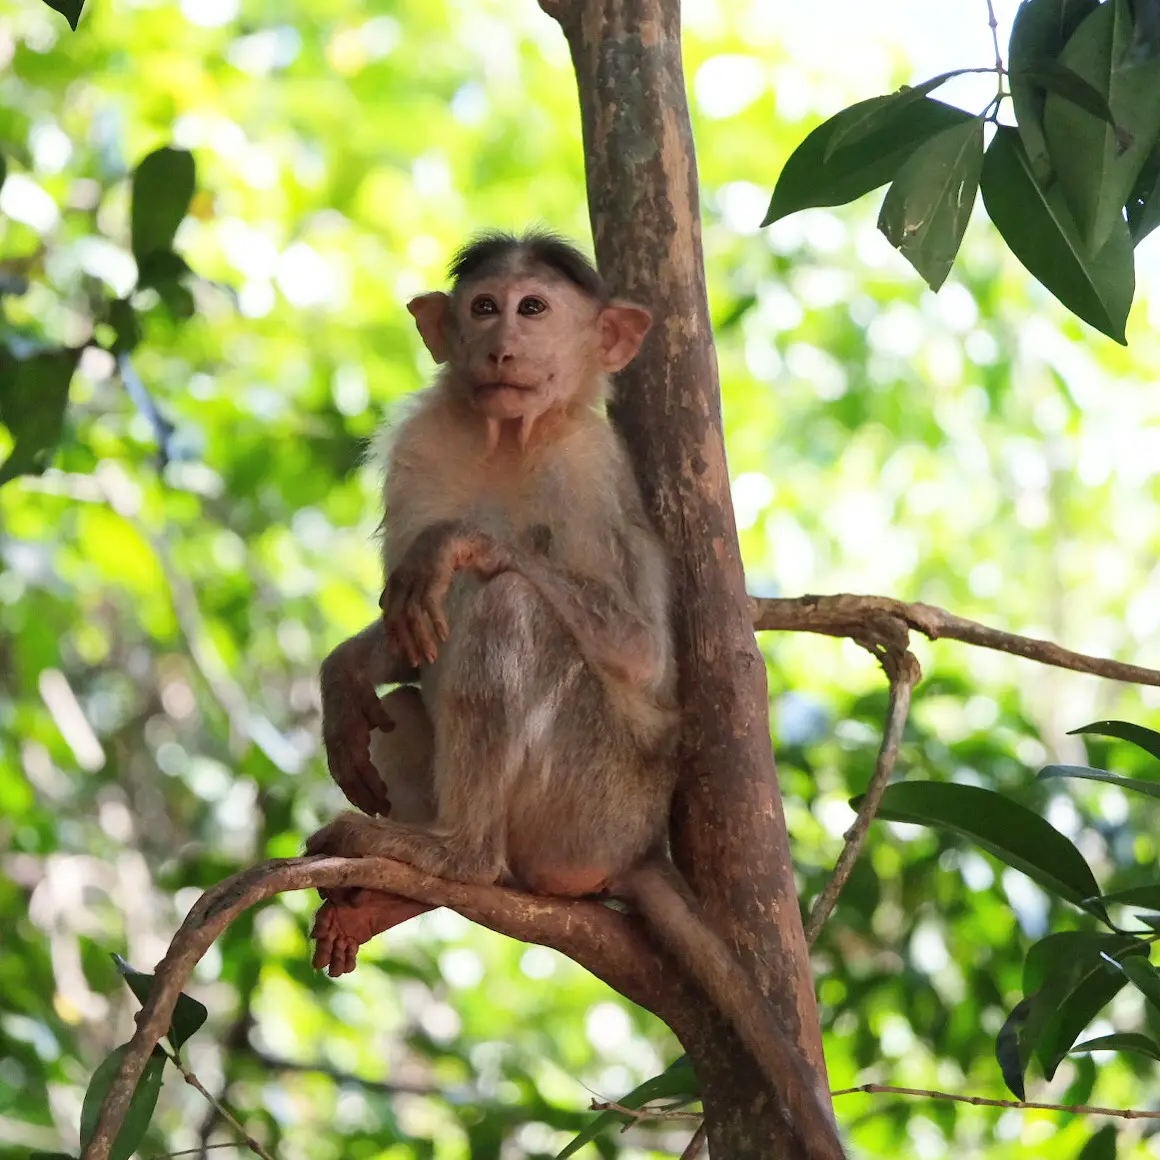 Bonnet macaque in Goa